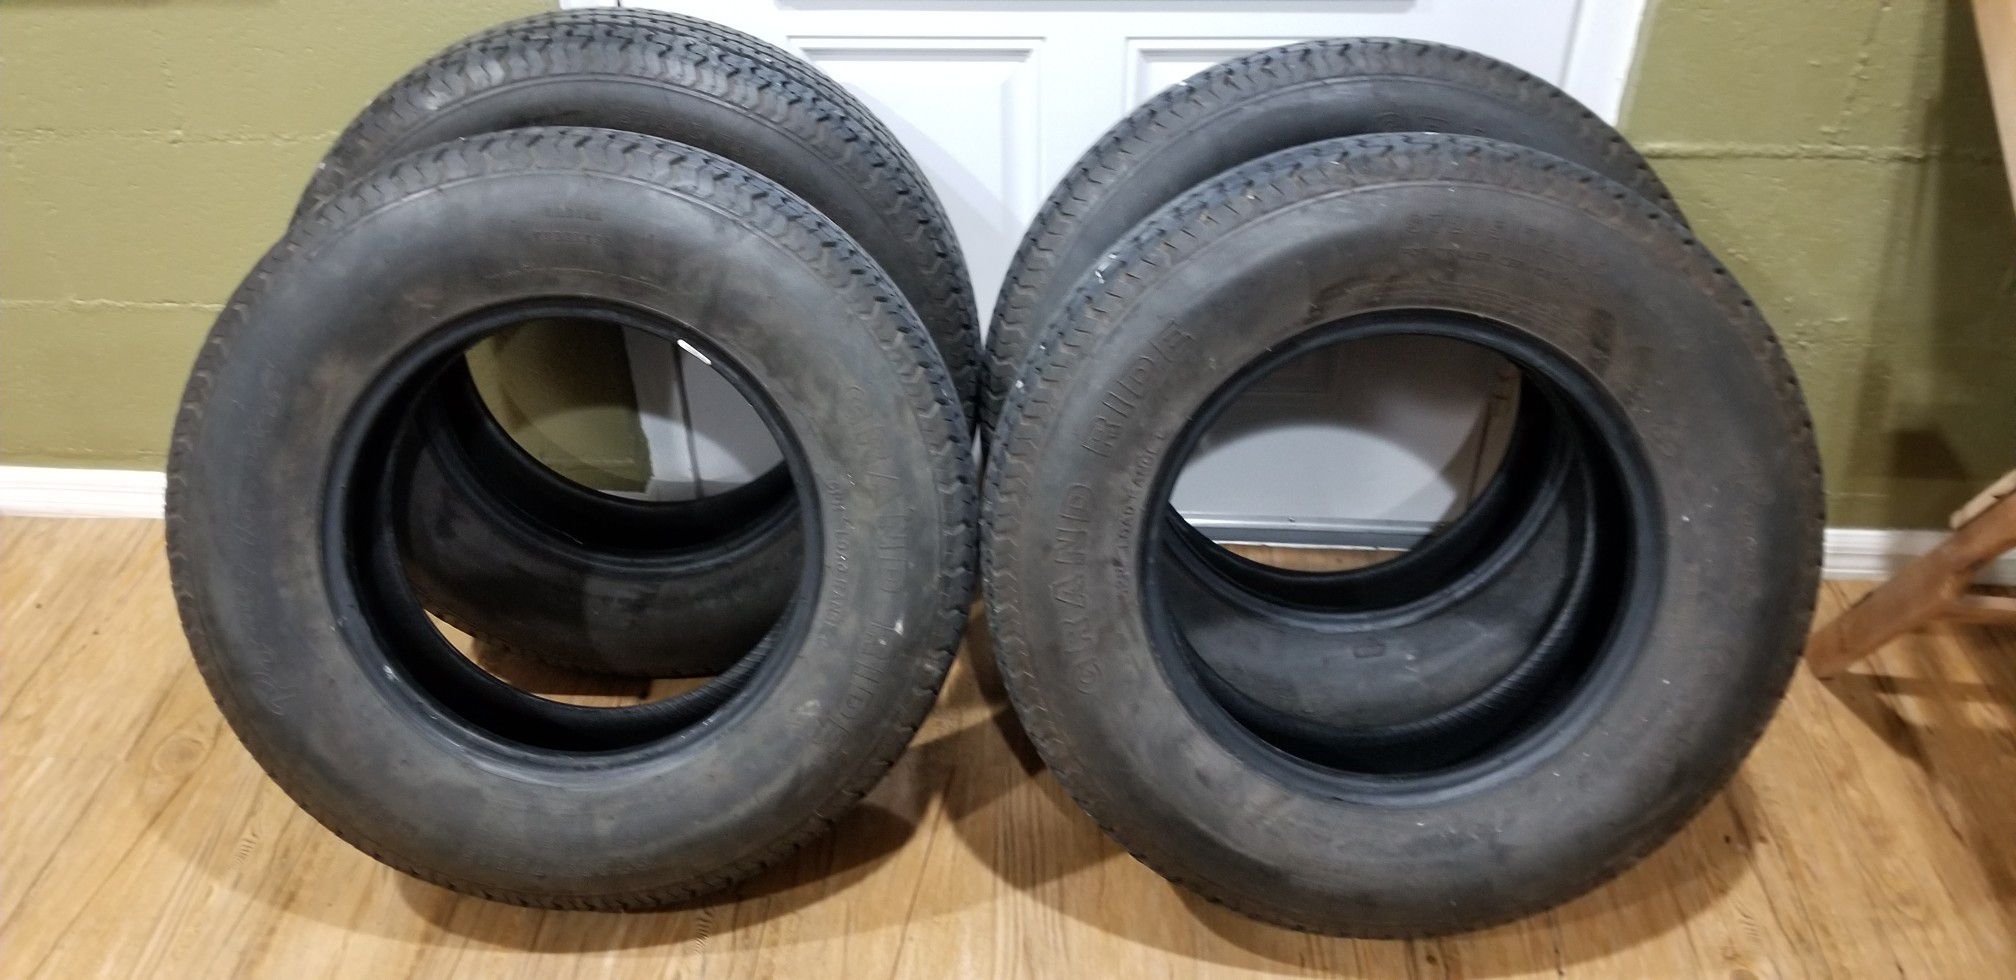 Trailer Tires